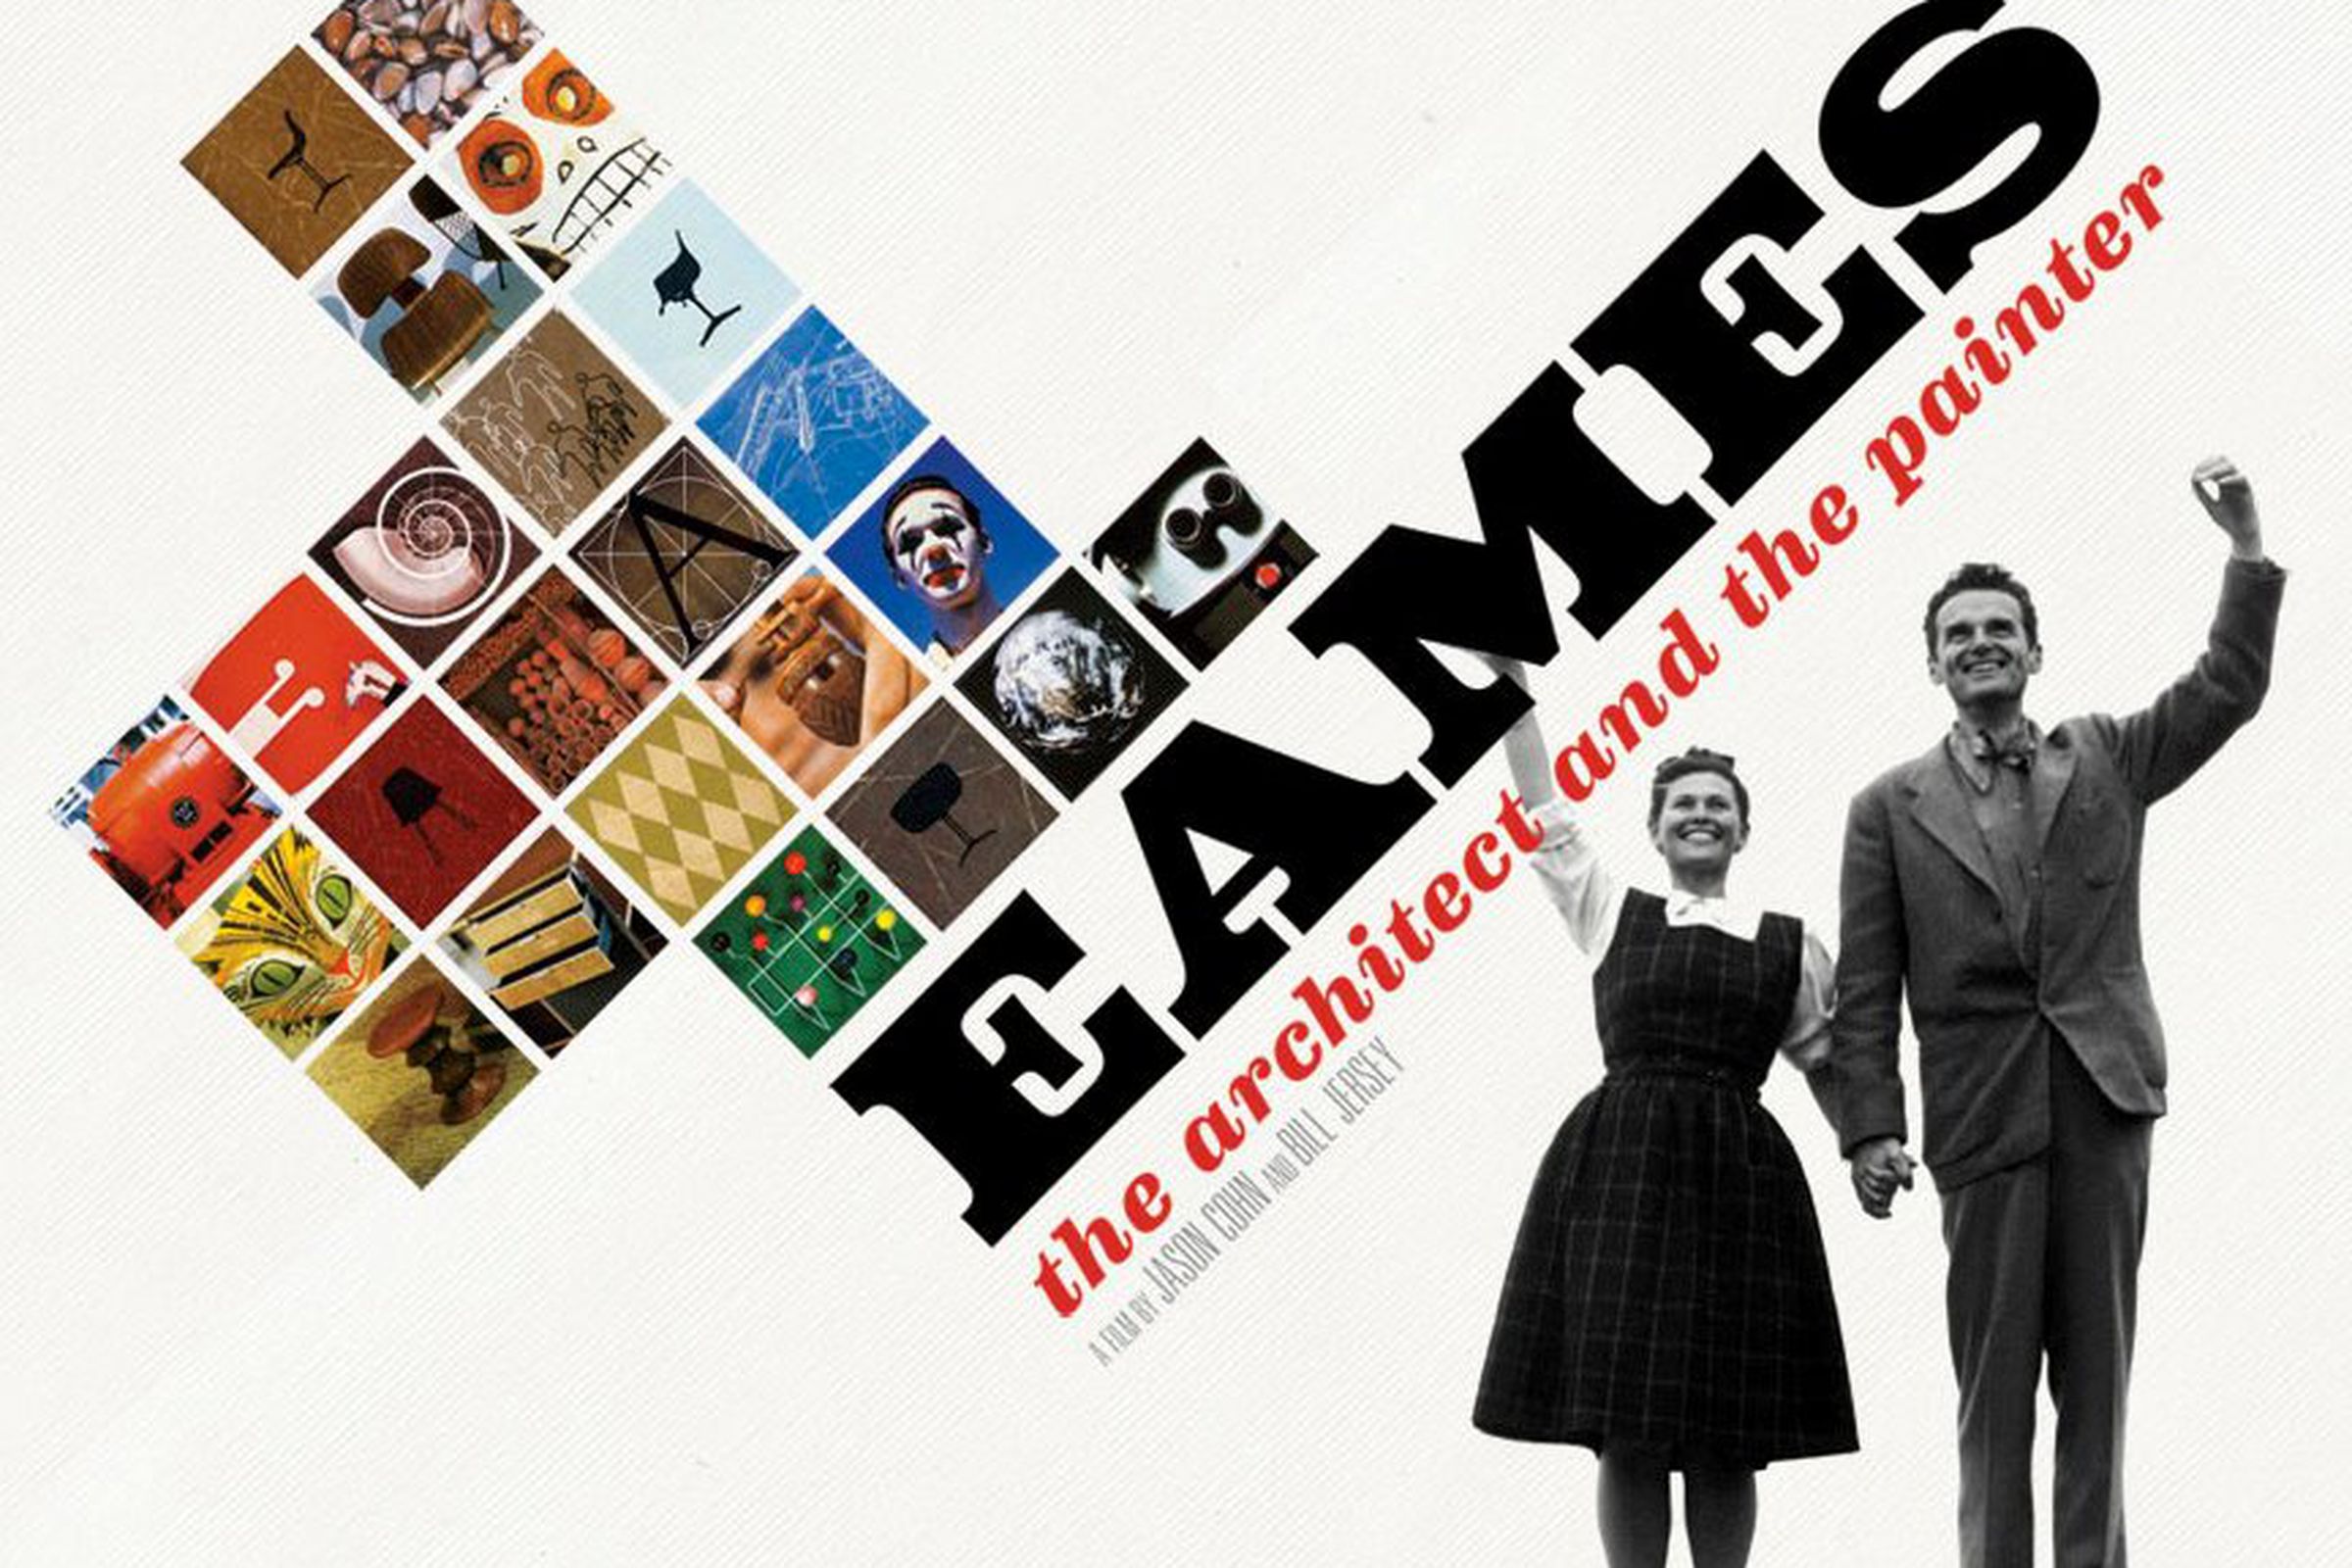 Eames documentary